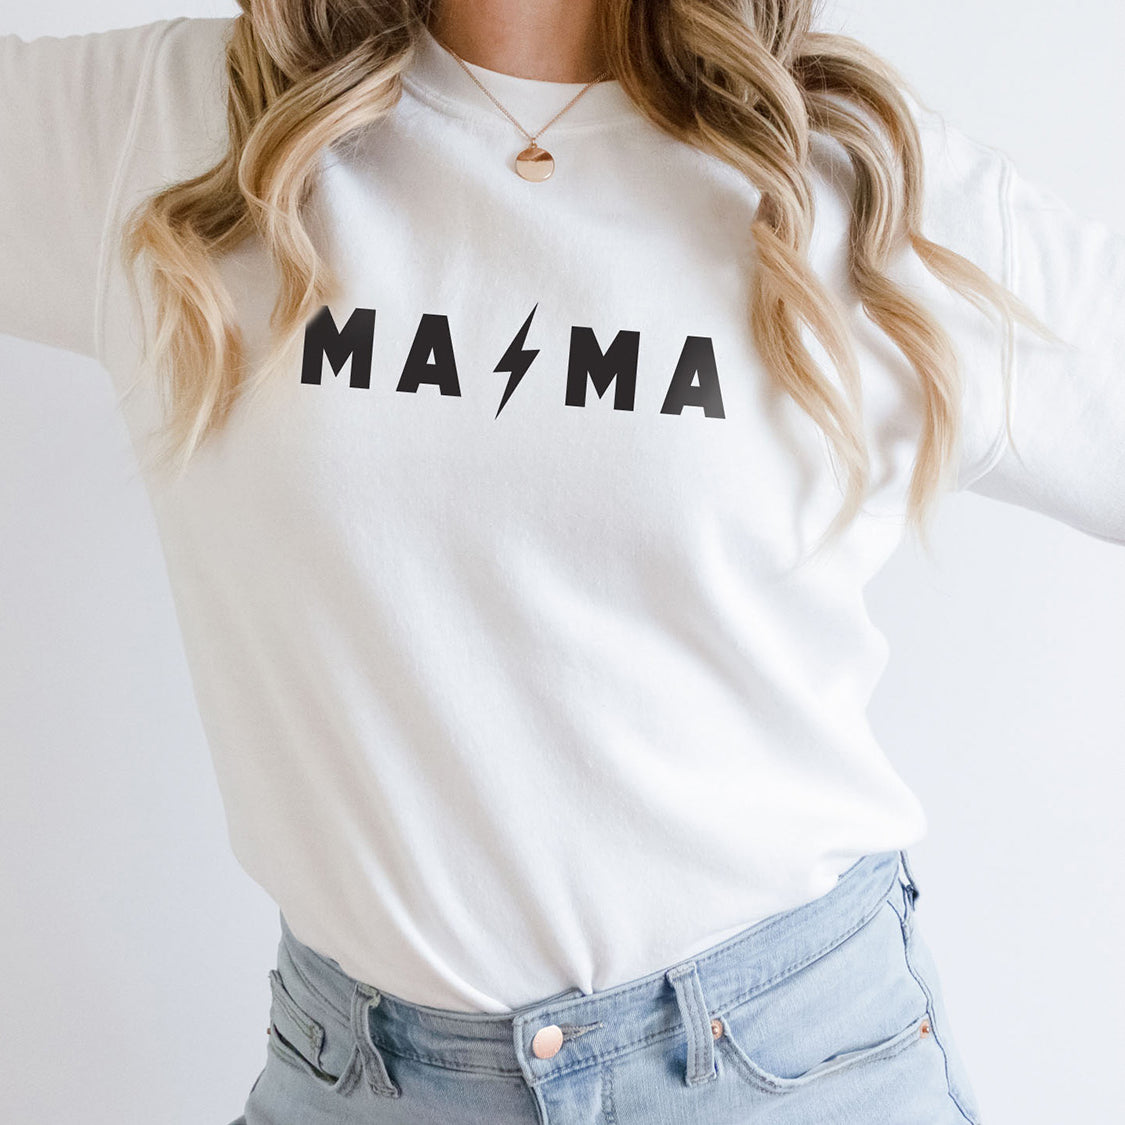 Mama Lightning Bolt Sweatshirt - Funny MOM Design Printed Sweatshirt